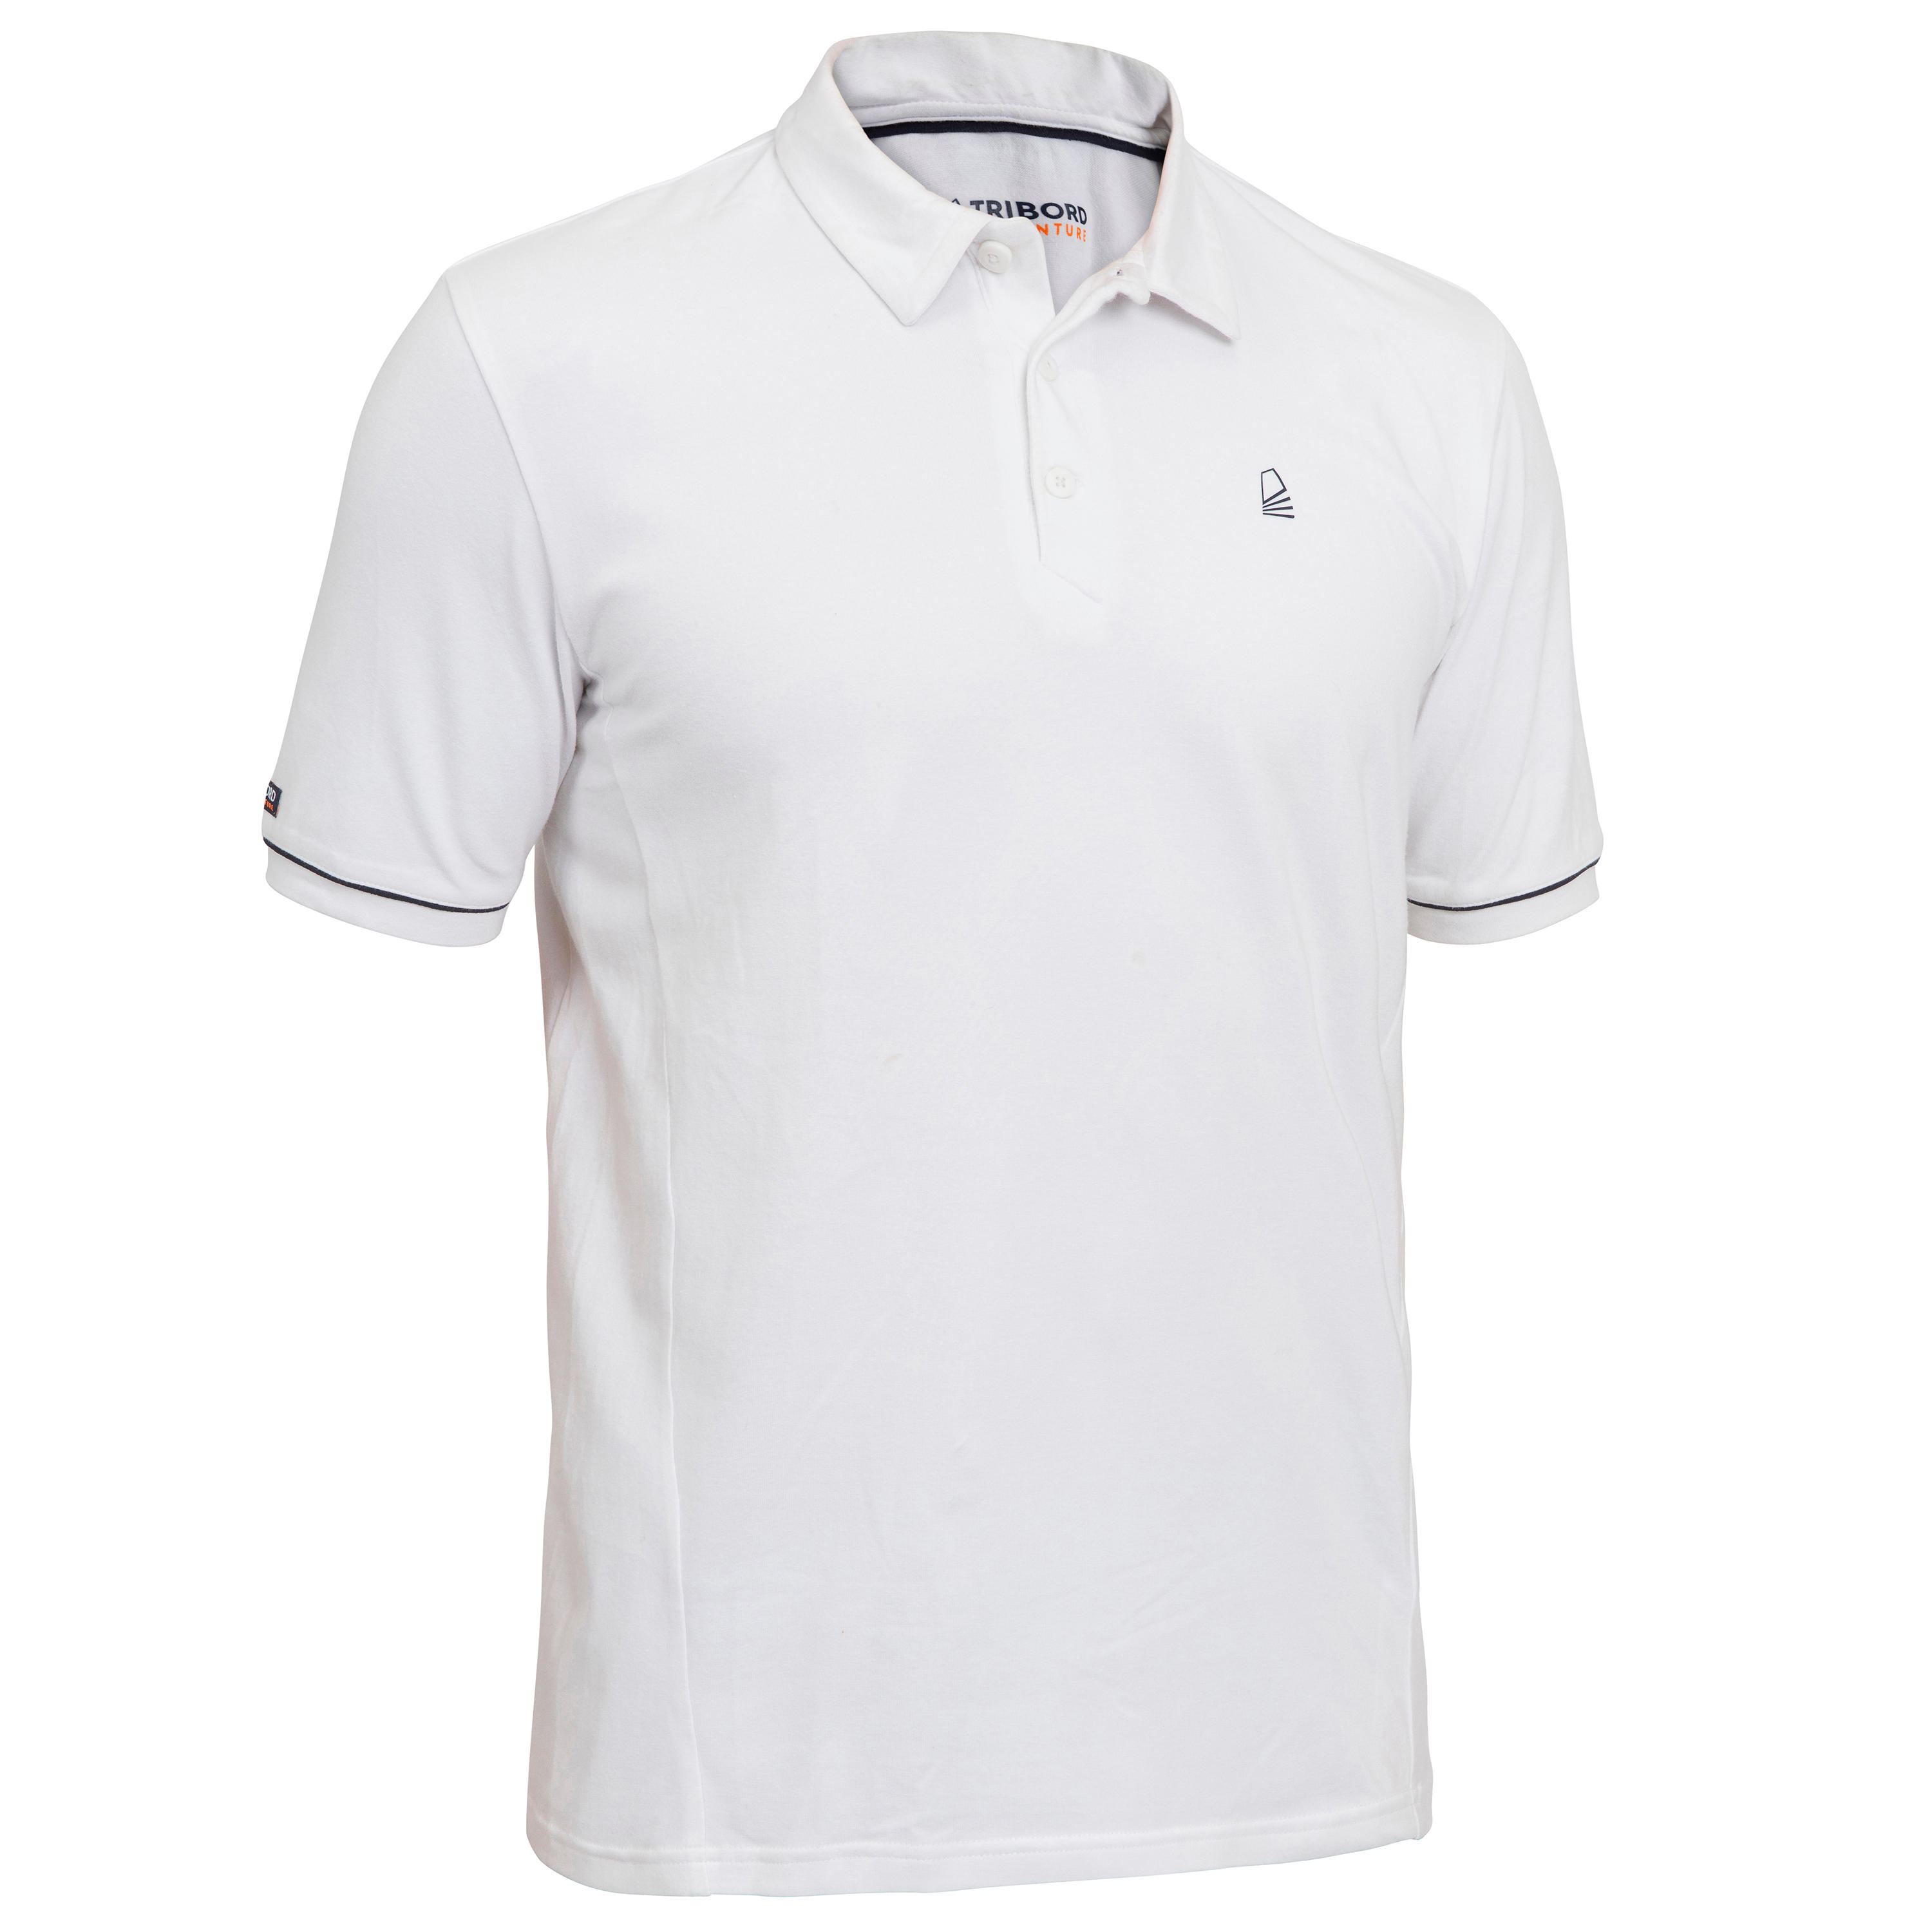 Sailing 100 Men's Sailing Short Sleeve Polo Shirt - White 1/7